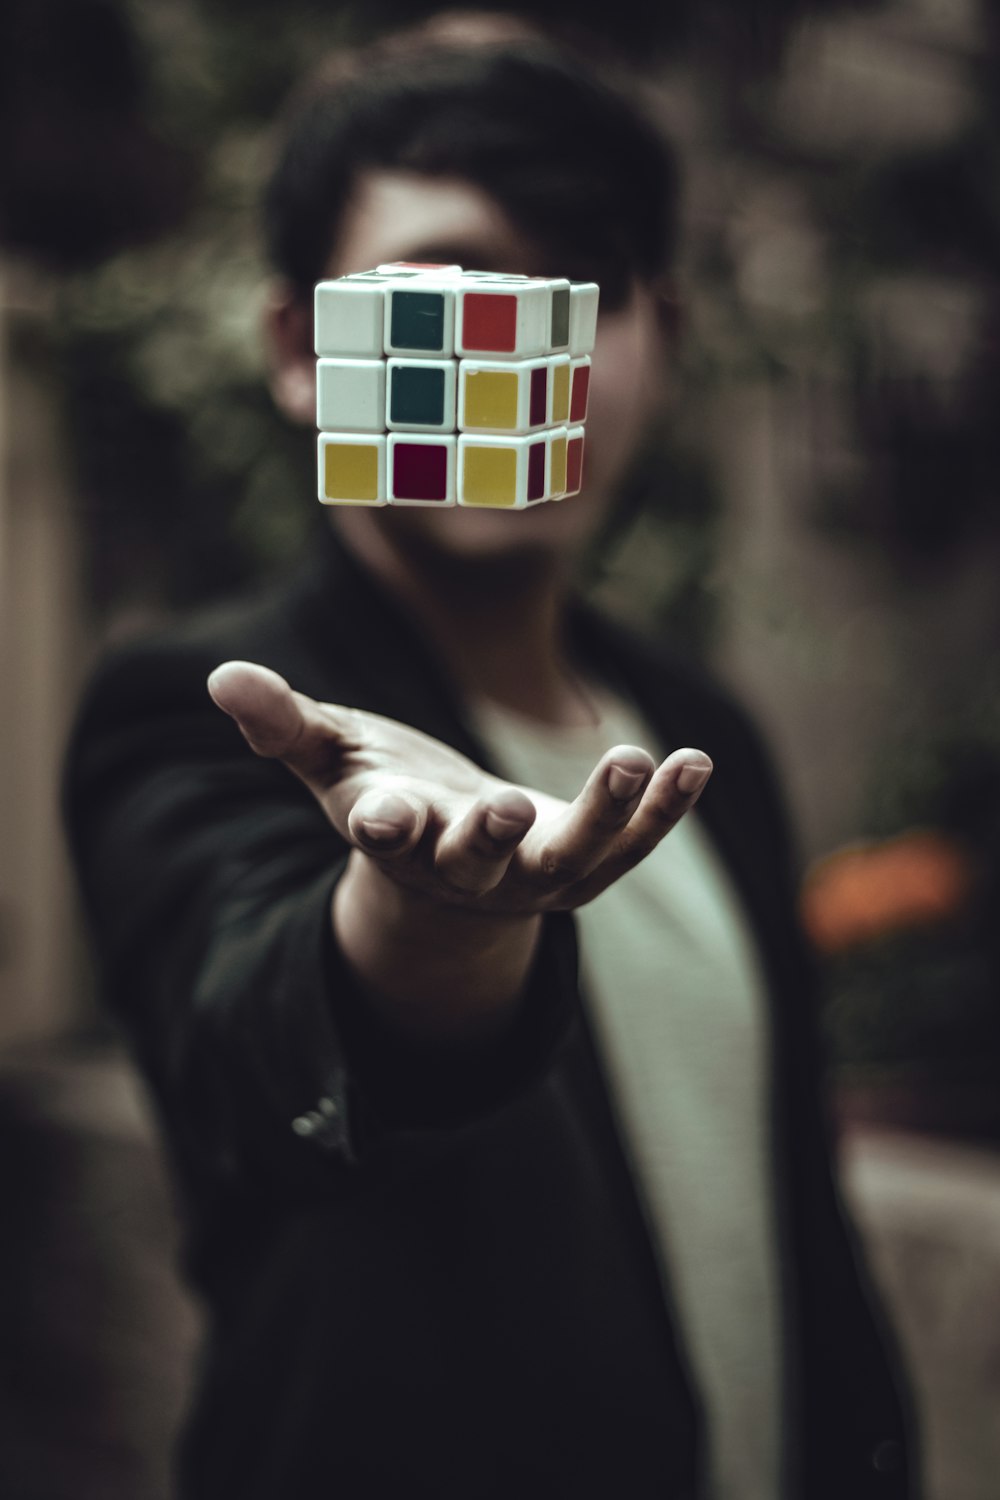 Rubik's cube floating on man's palm